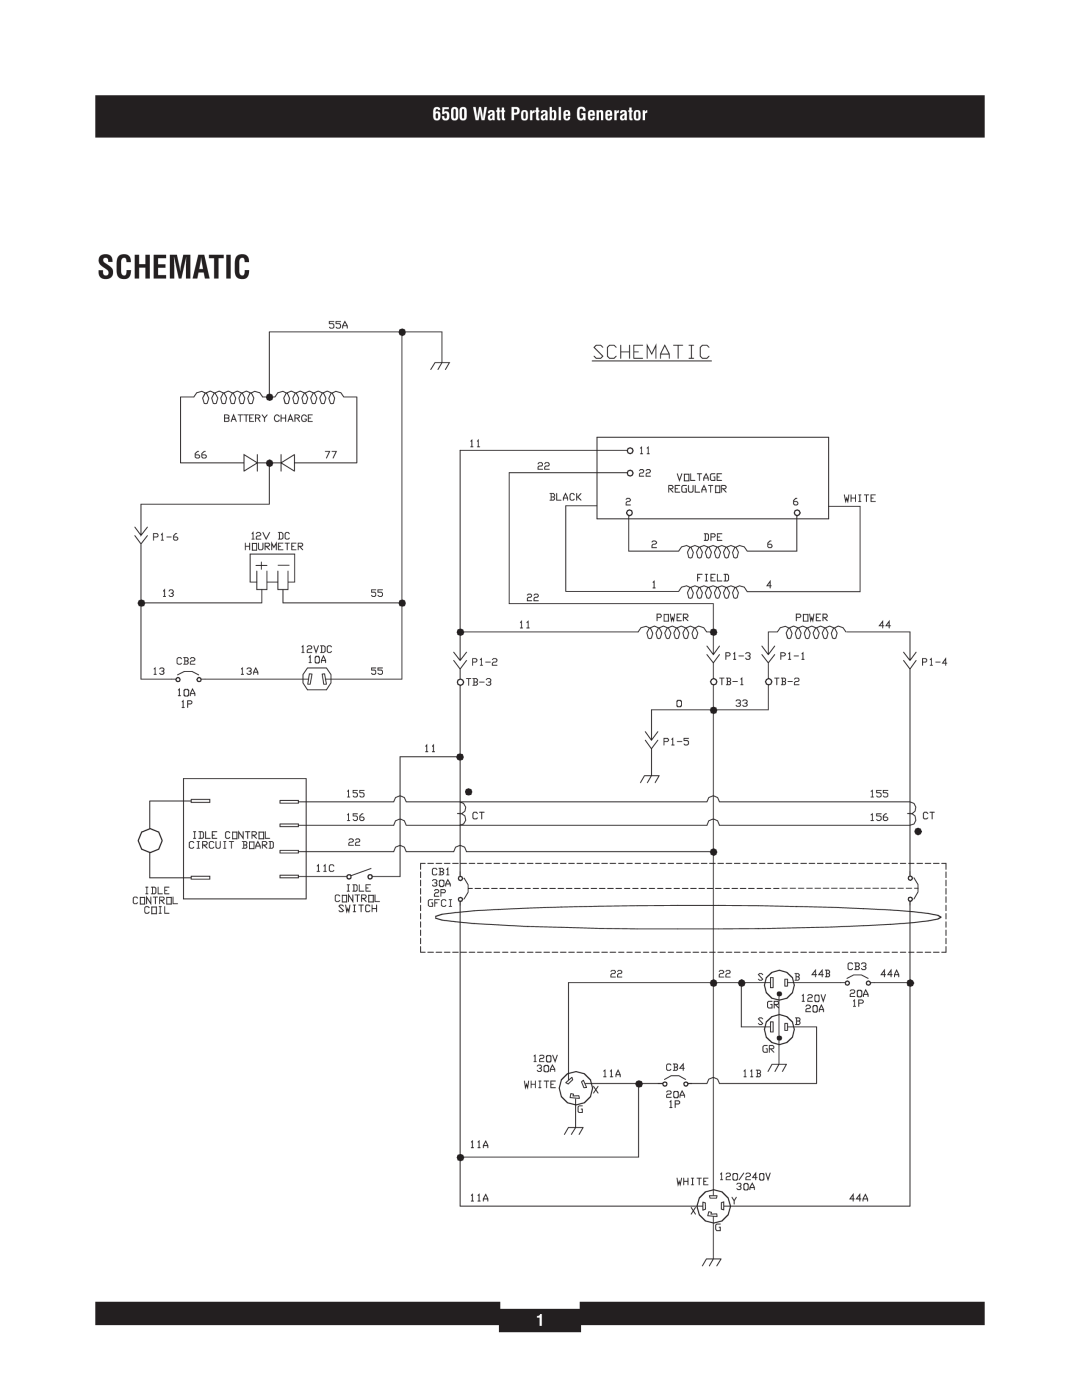 Briggs & Stratton 030336 manual Schematic, Watt Portable Generator 